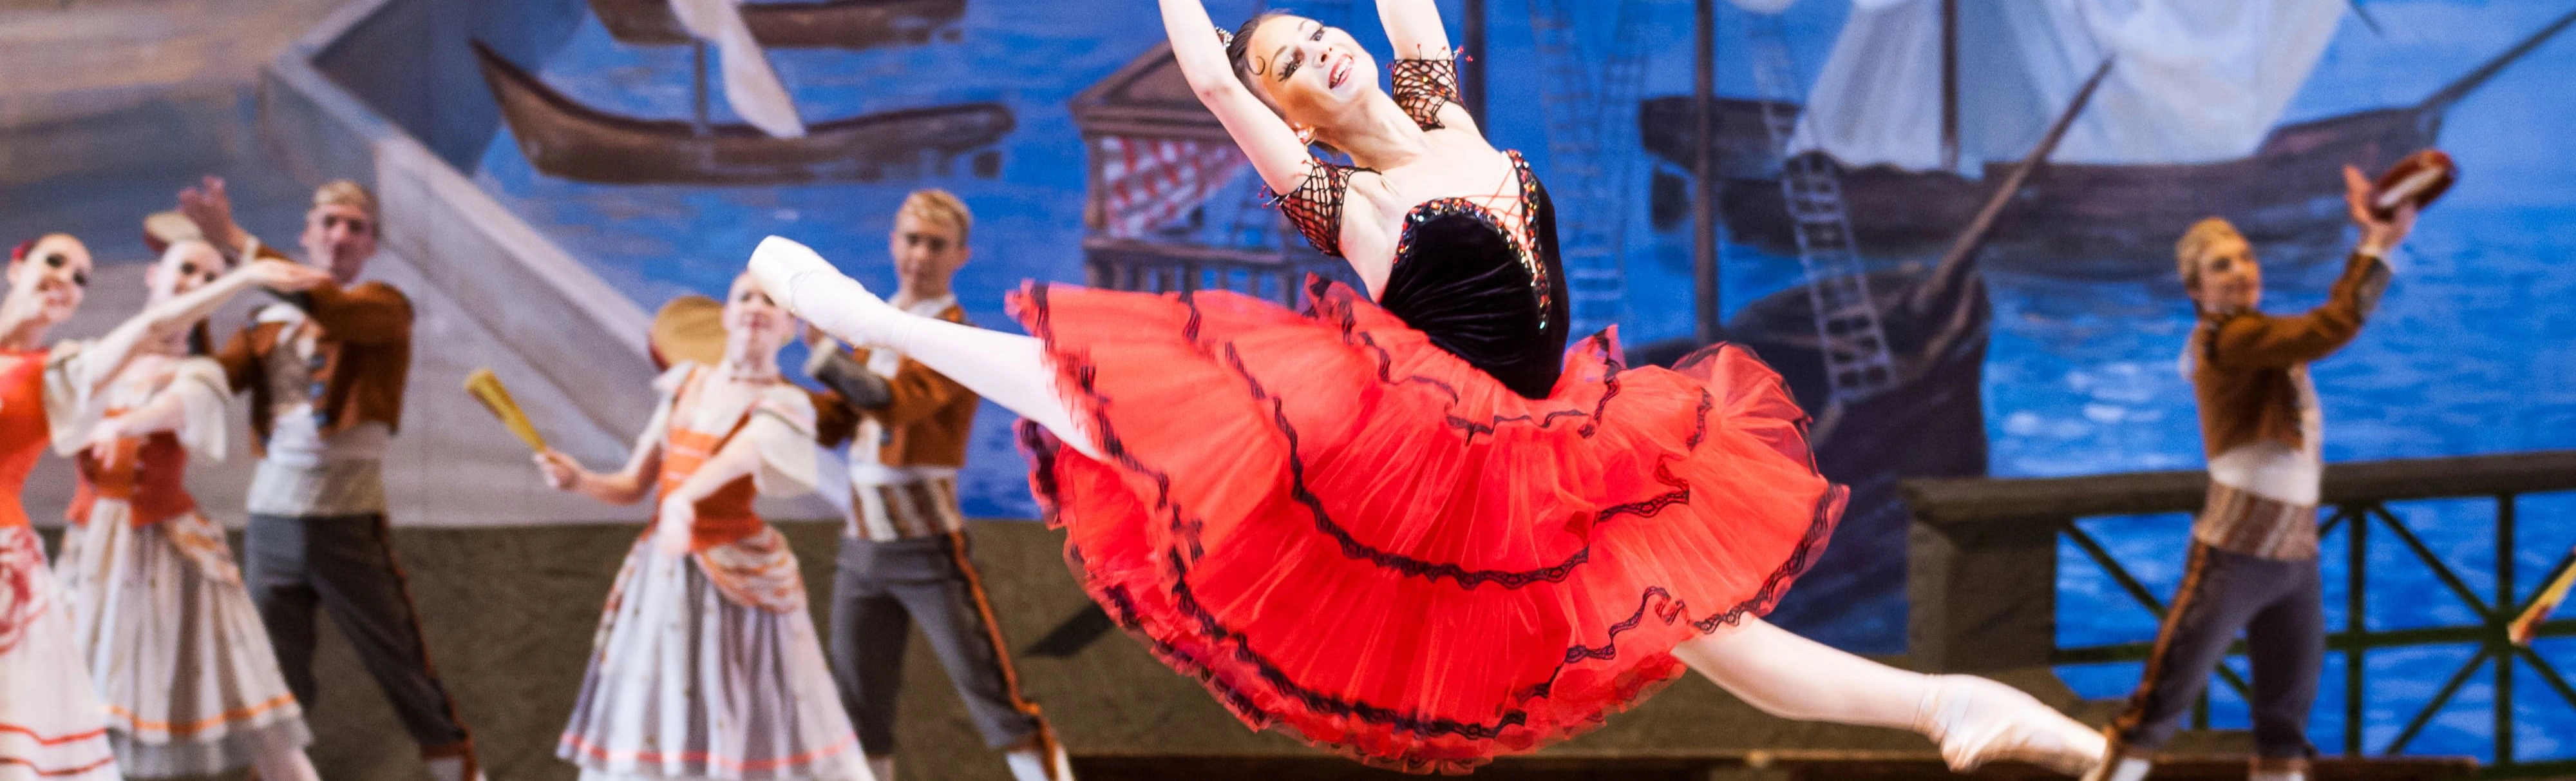 Волшебство балета "Дон Кихот" от Театра балета Юрия Григоровича ожидает вас на сцене прекрасного Зимнего театра!